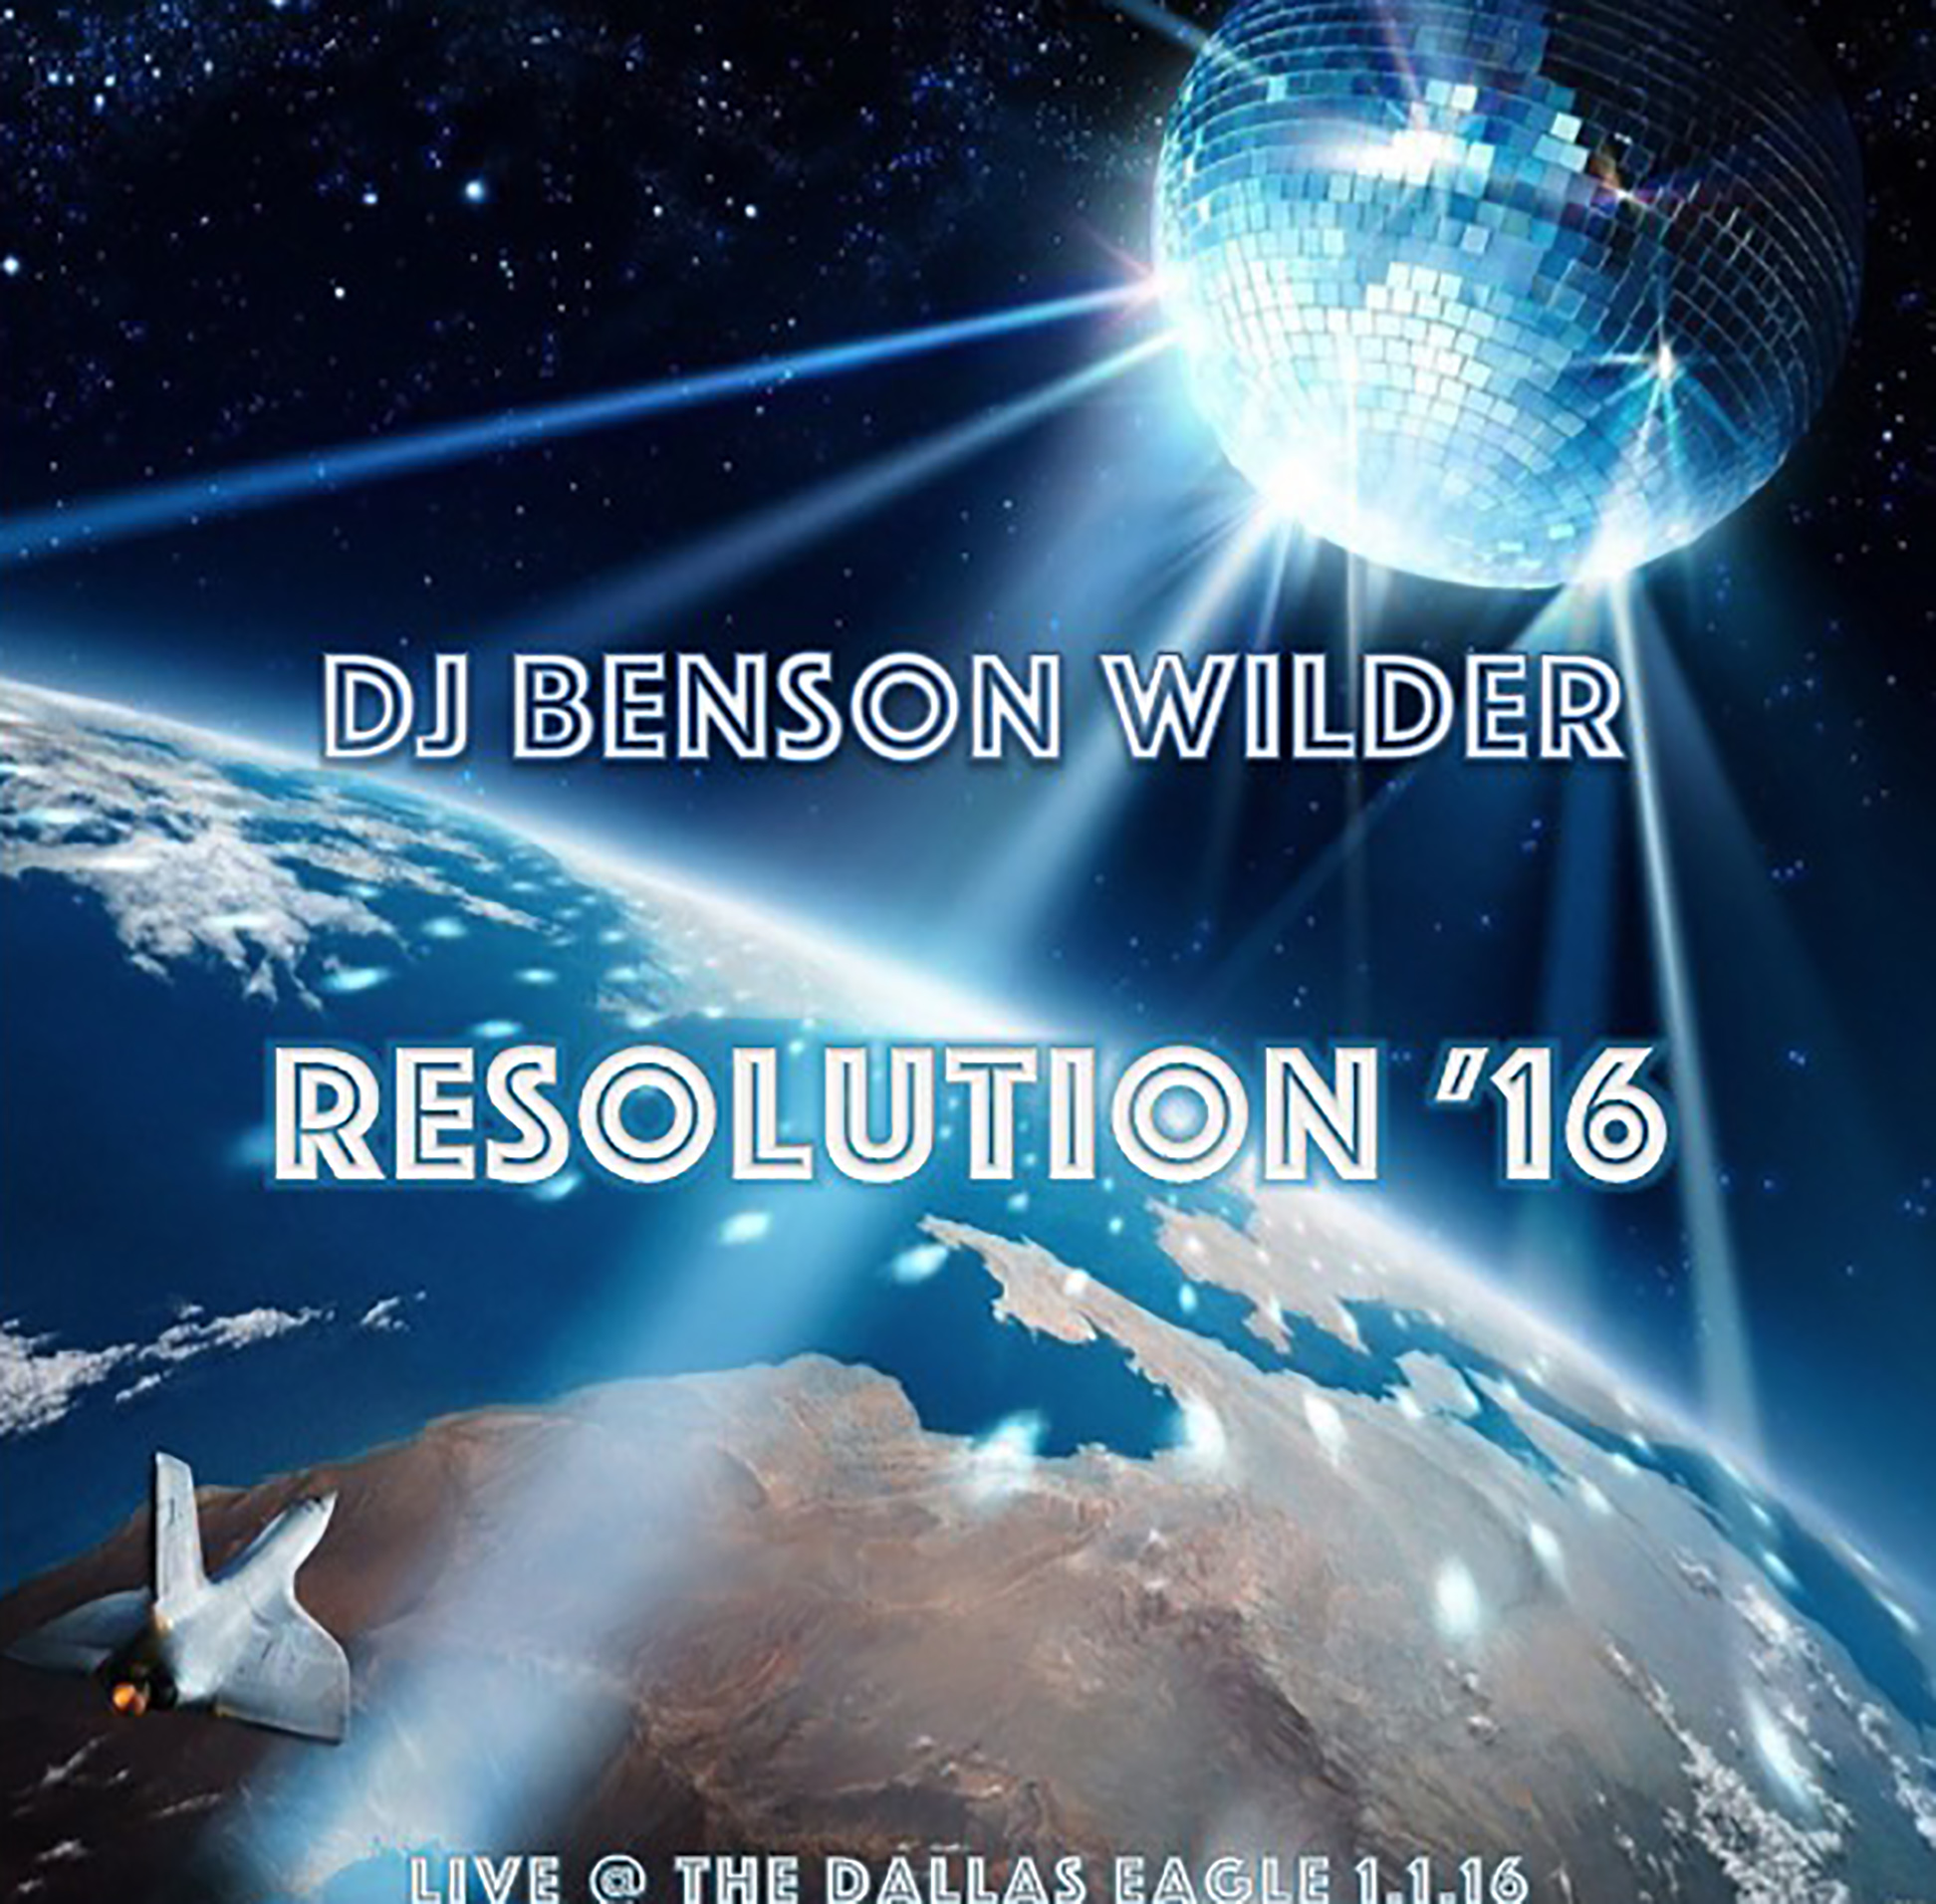 RESOLUTION '16 - LIVE 1.1.16